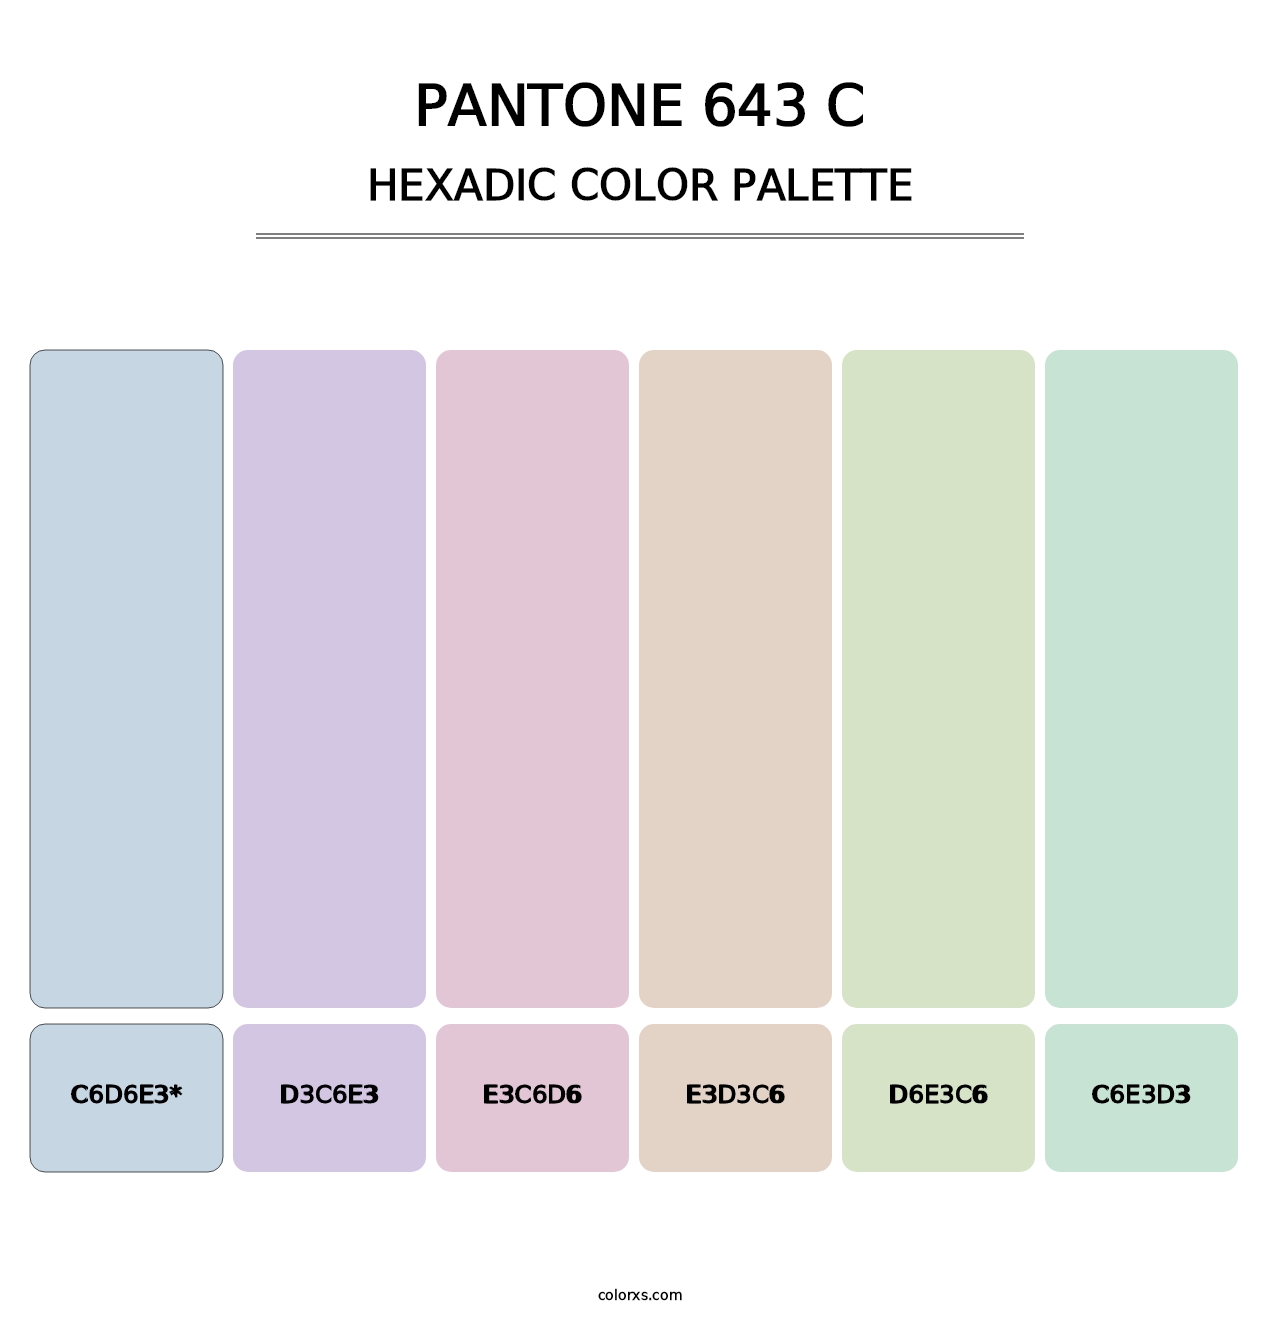 PANTONE 643 C - Hexadic Color Palette